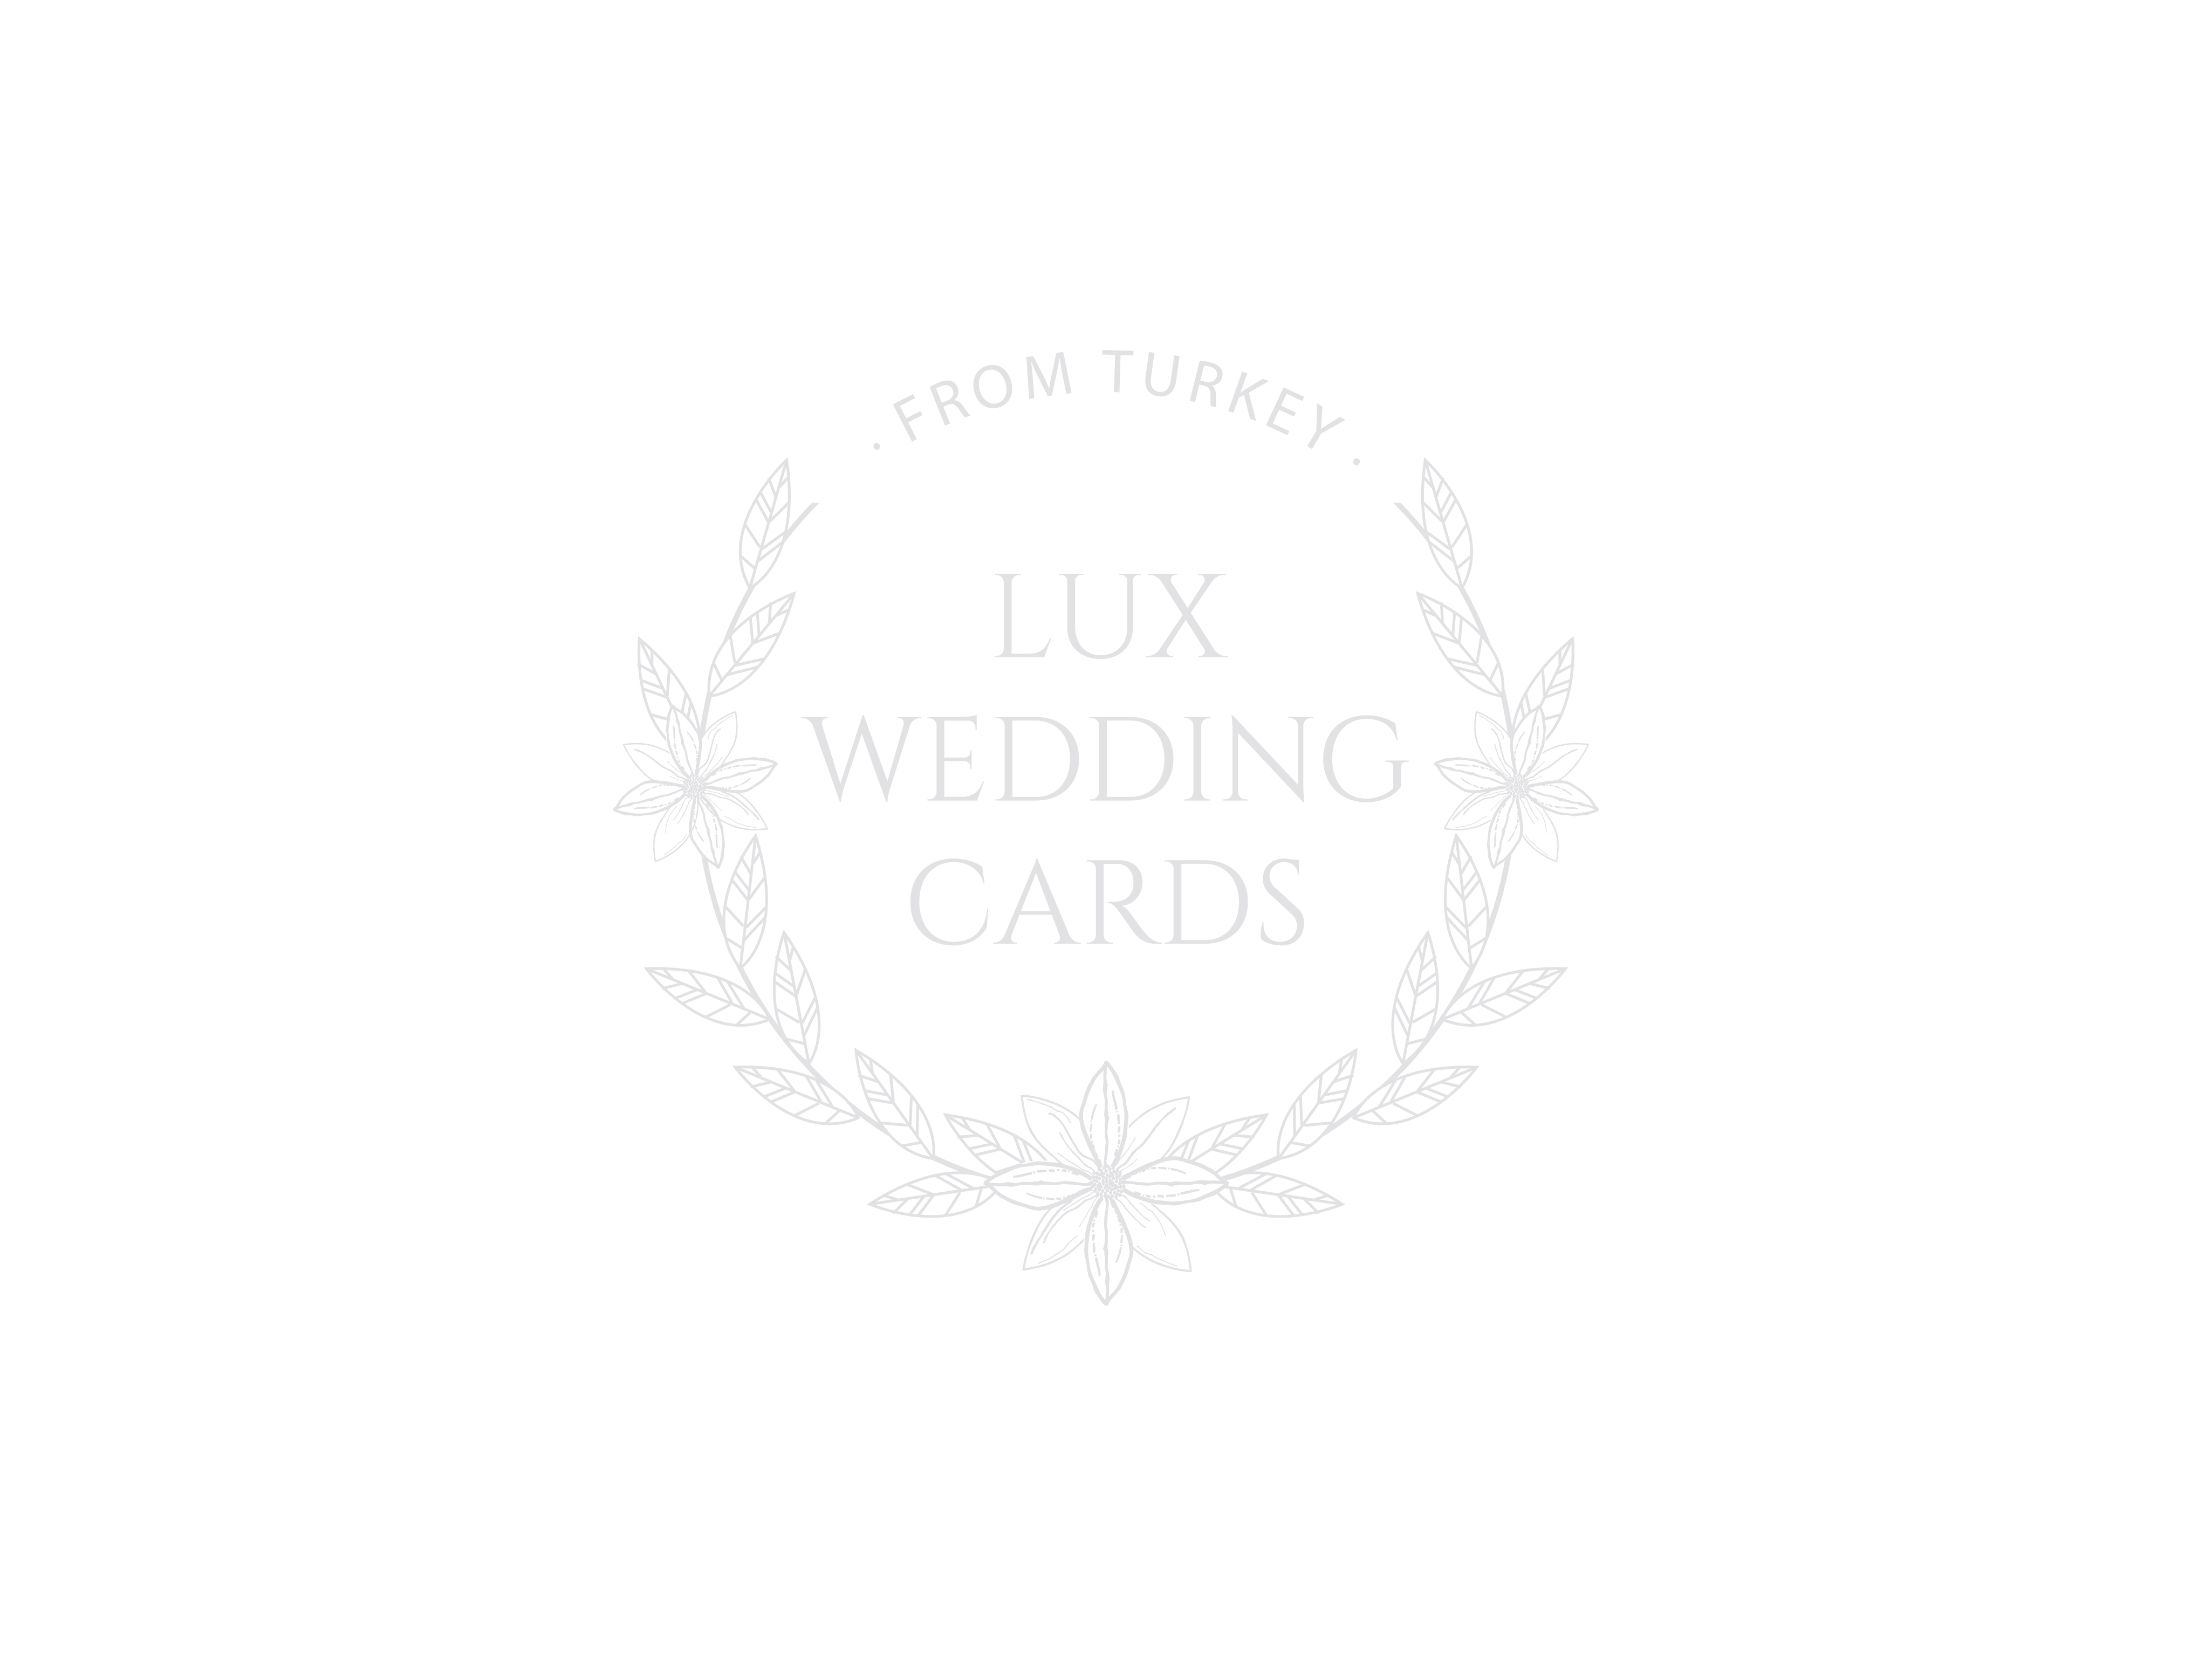 LUX WEDDING CARDS